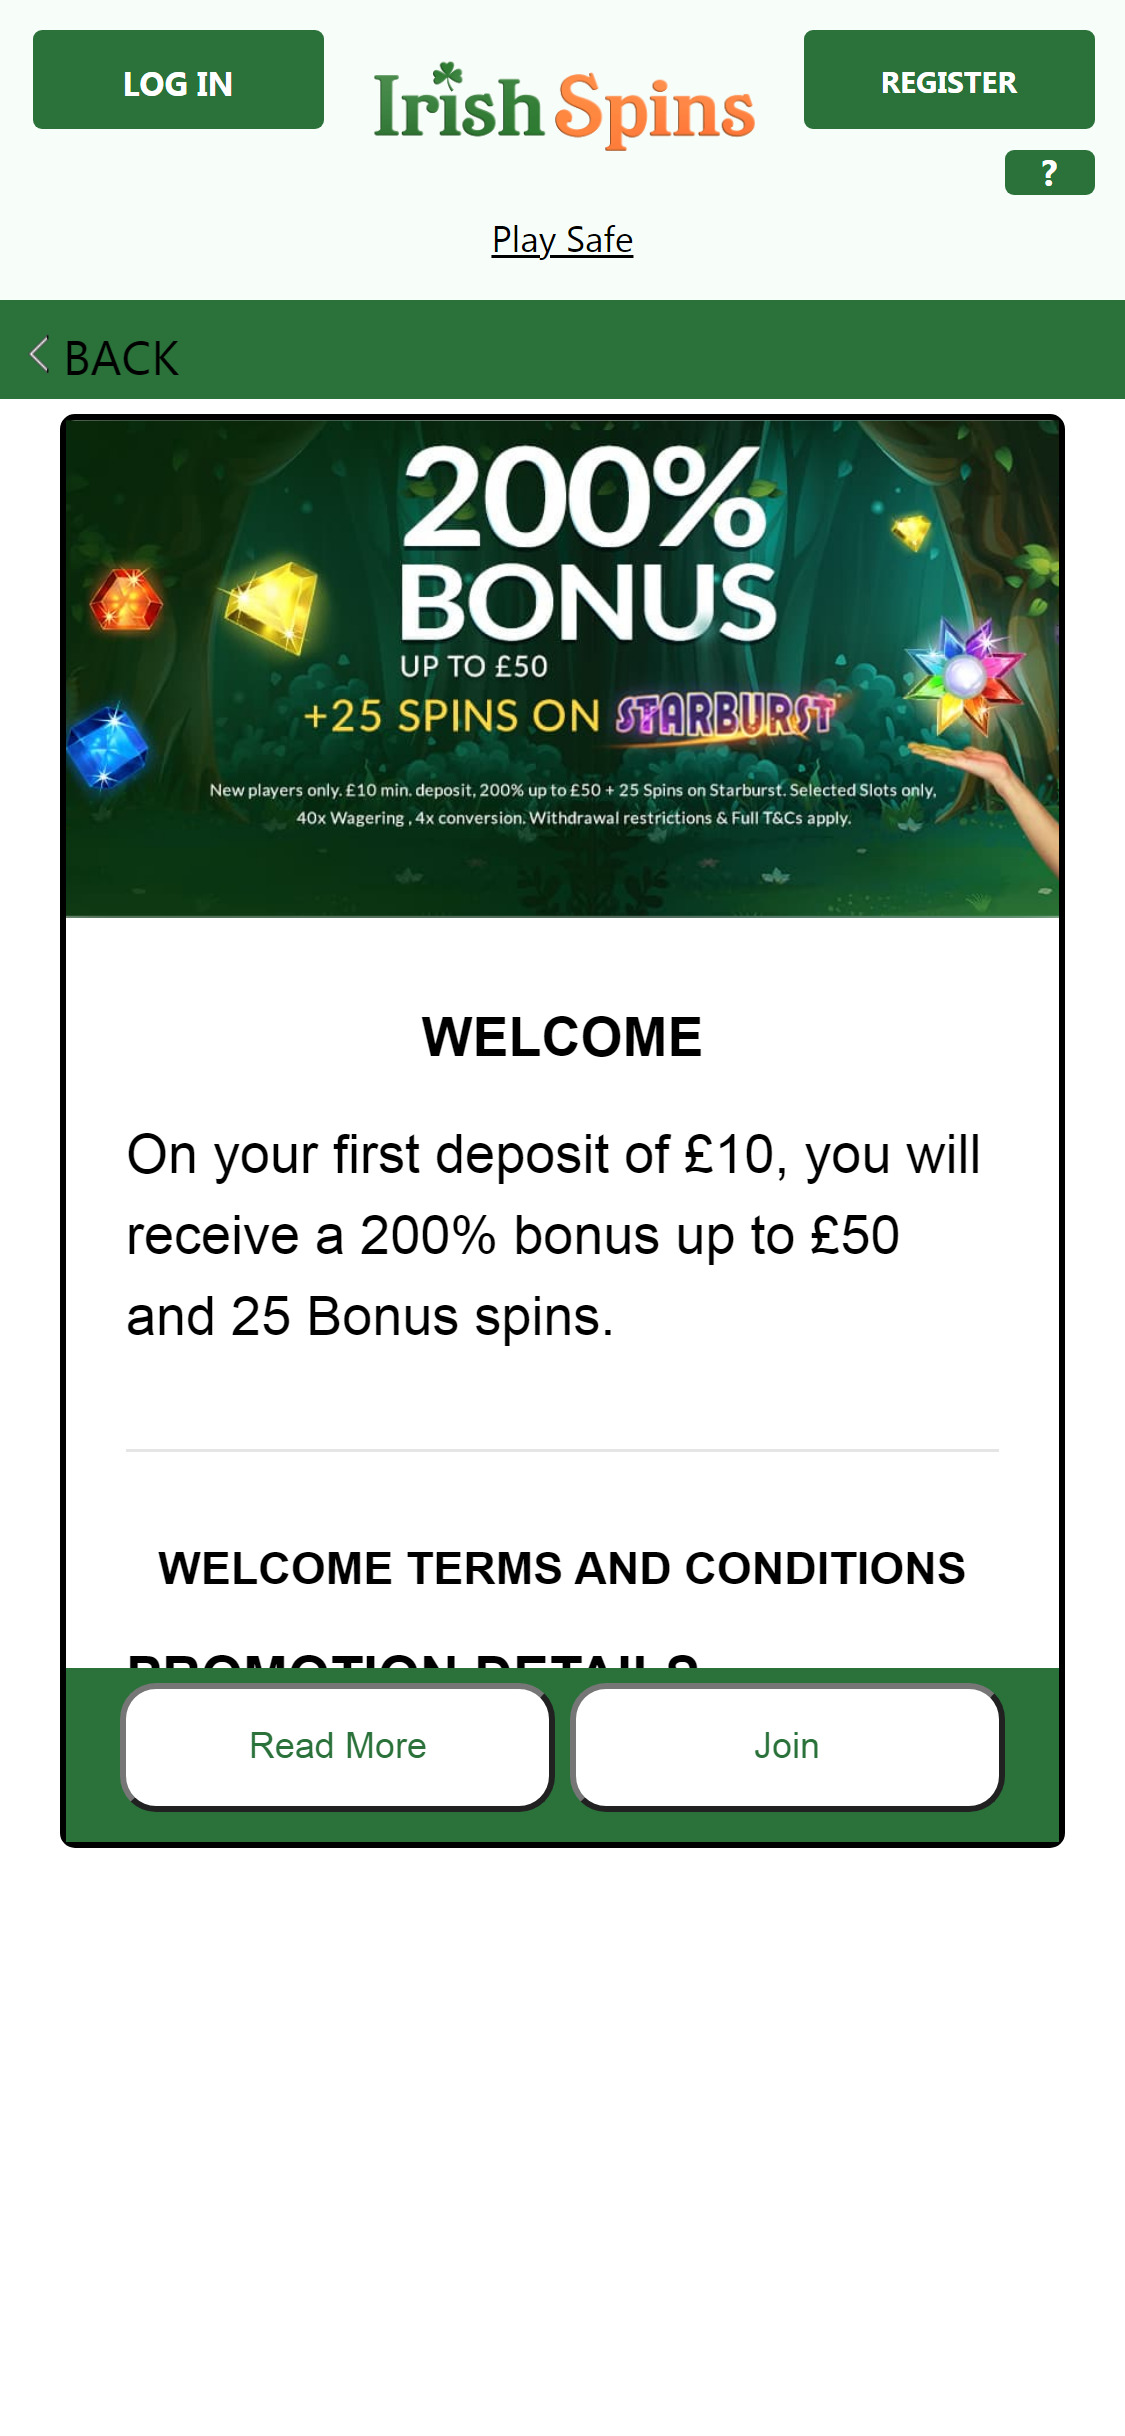 Irish Spins Casino Mobile No Deposit Bonus Review